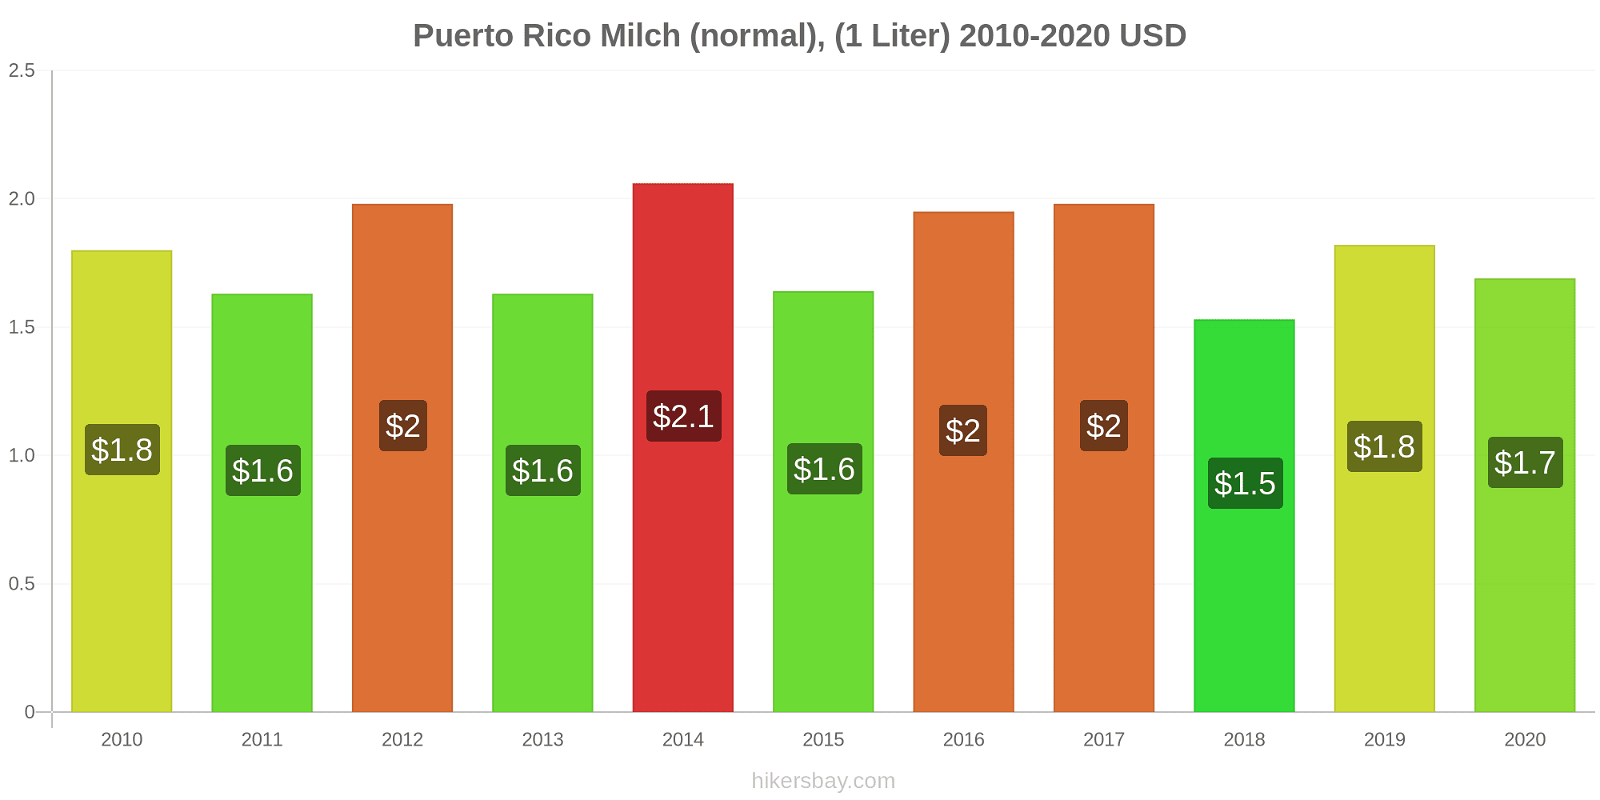 Puerto Rico Preisänderungen (Regulär), Milch (1 Liter) hikersbay.com